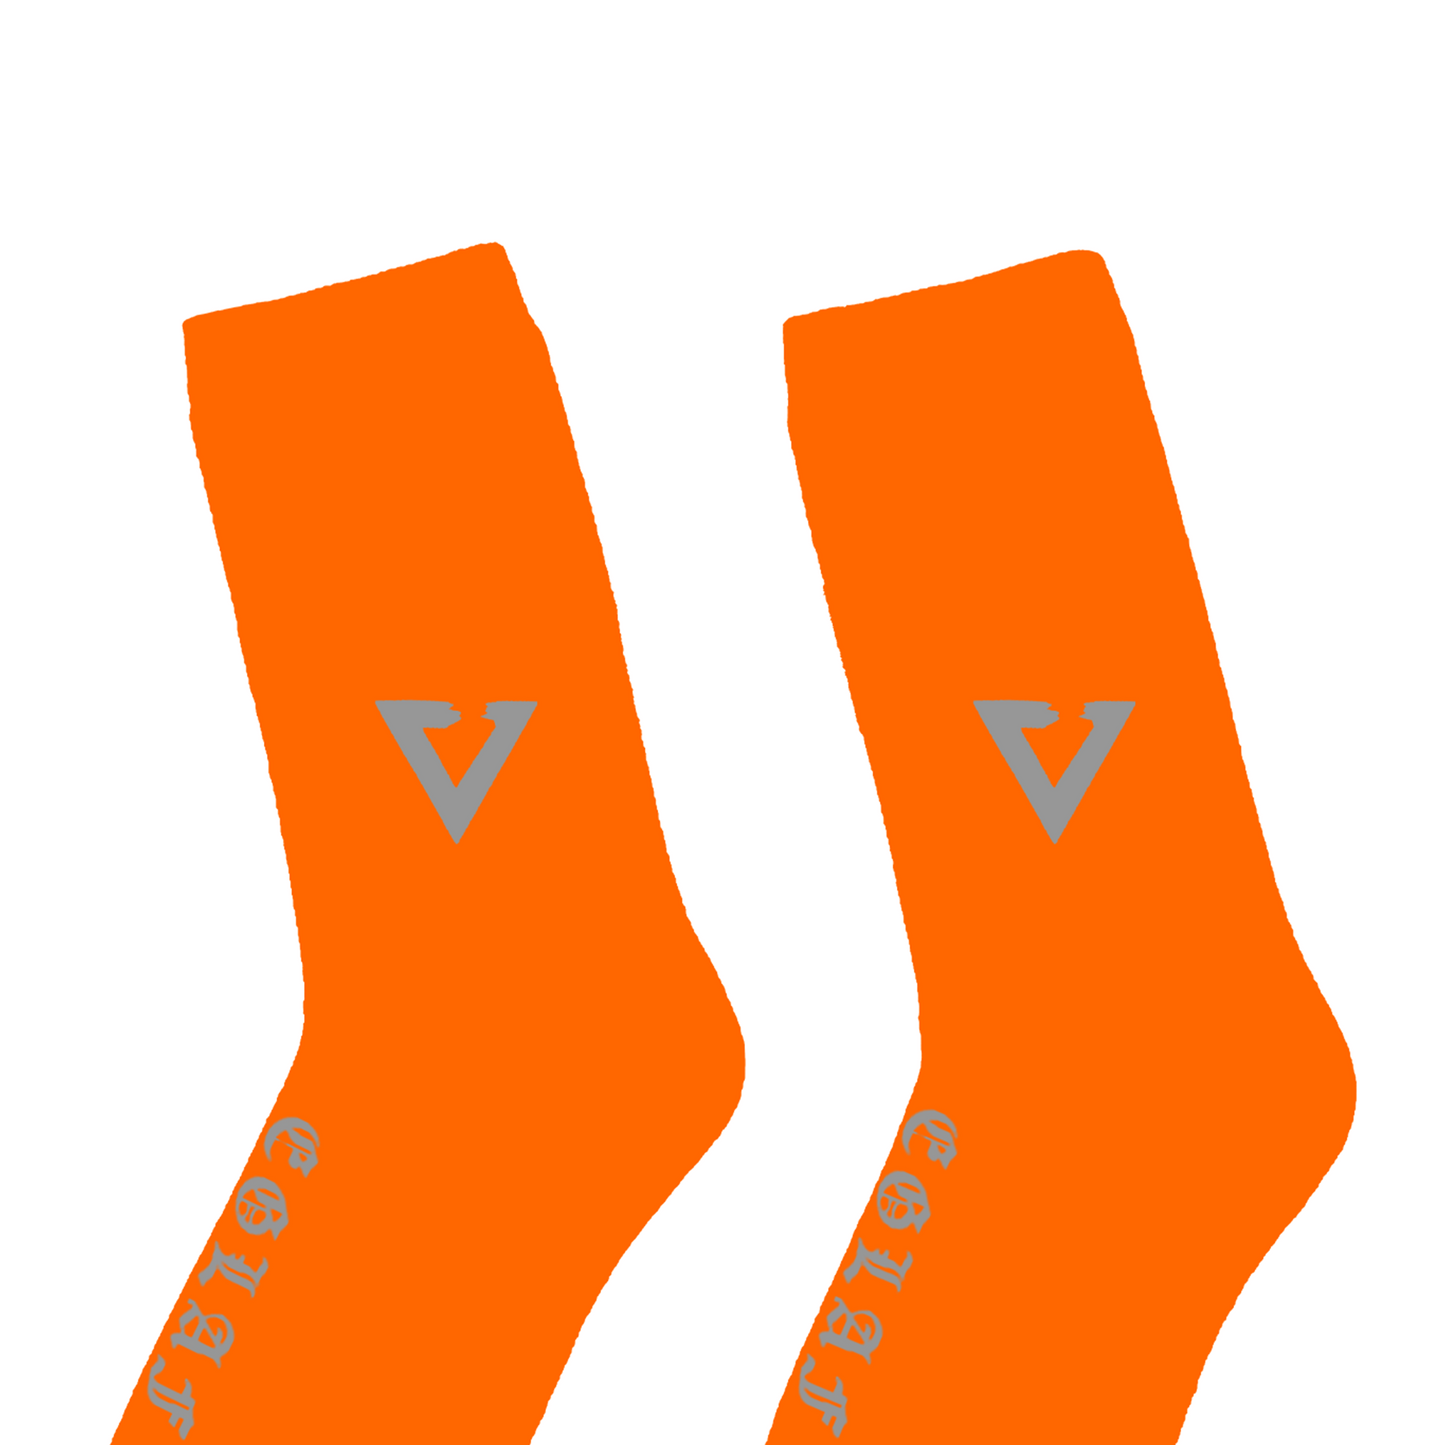 EGLAF Crew Socks Reflective Neon Orange